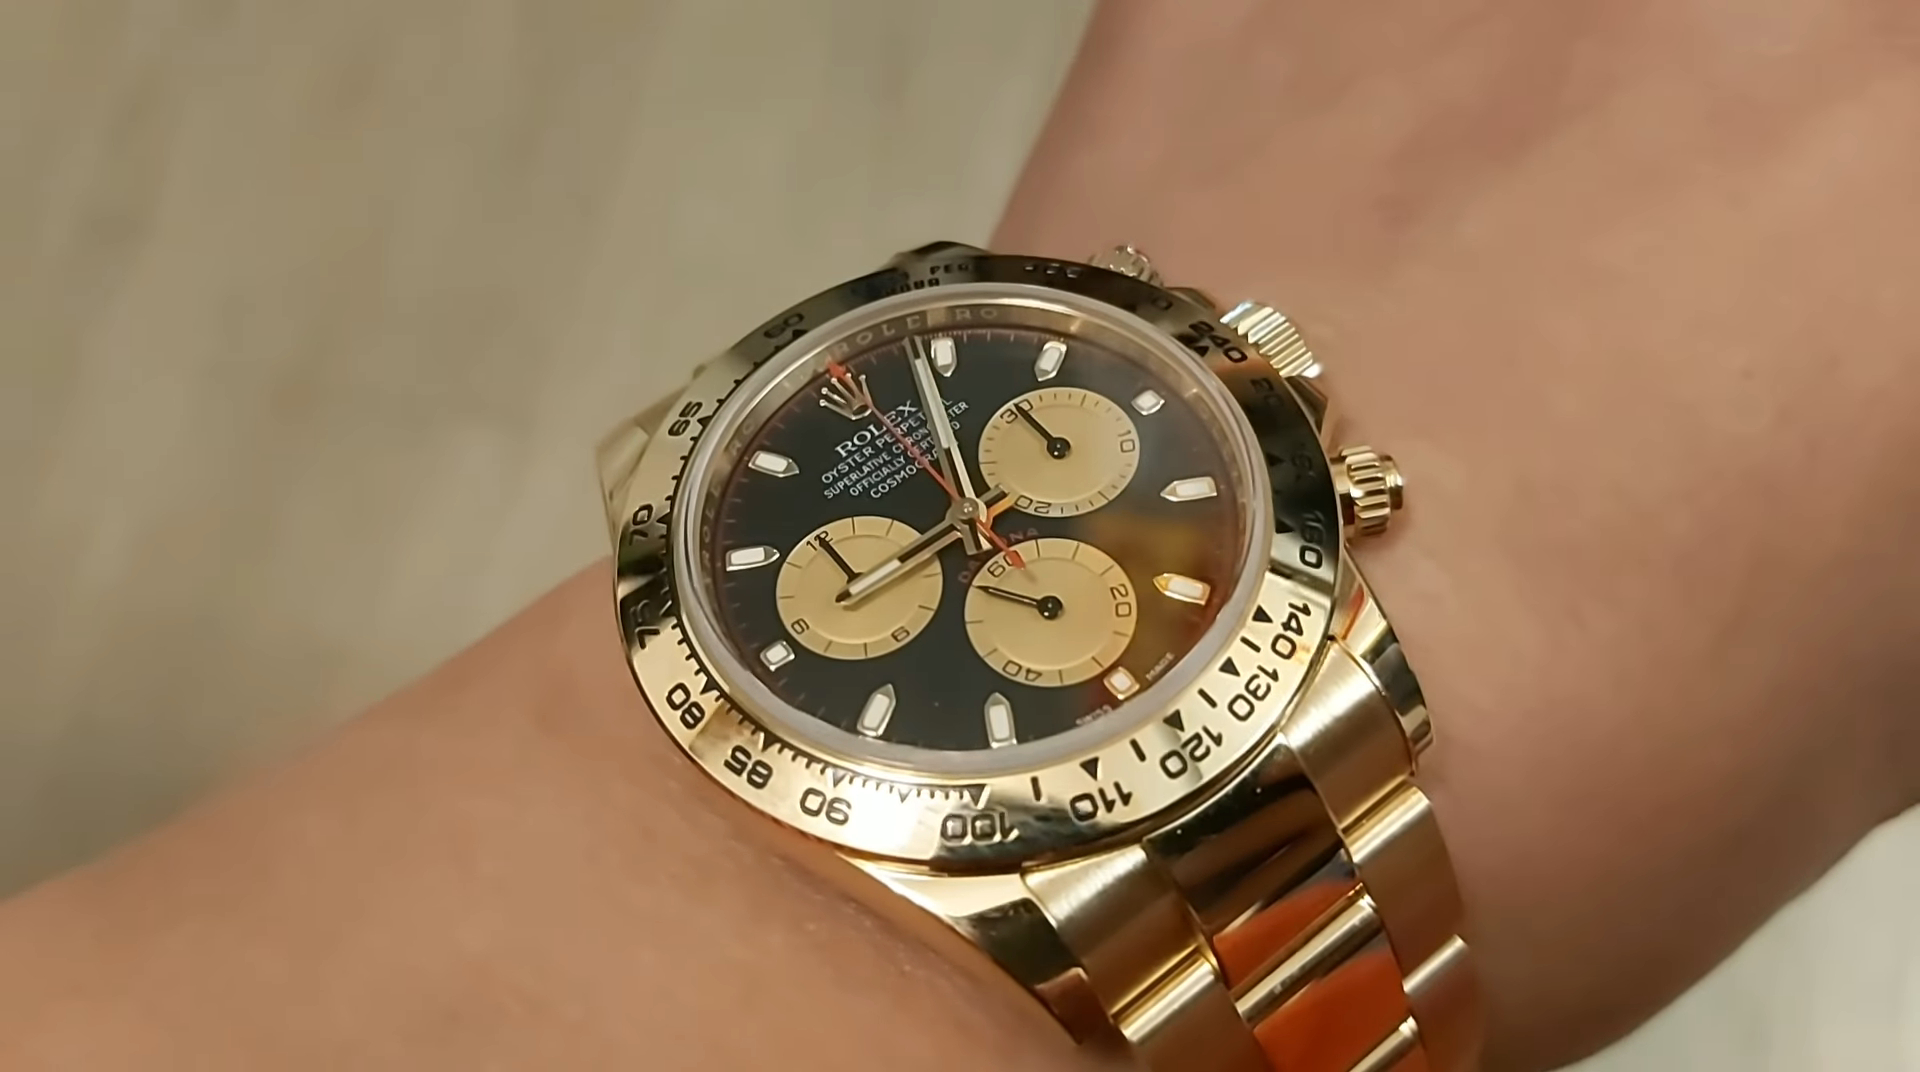 Rolex "Paul Newman" Daytona - one of highest cost watch